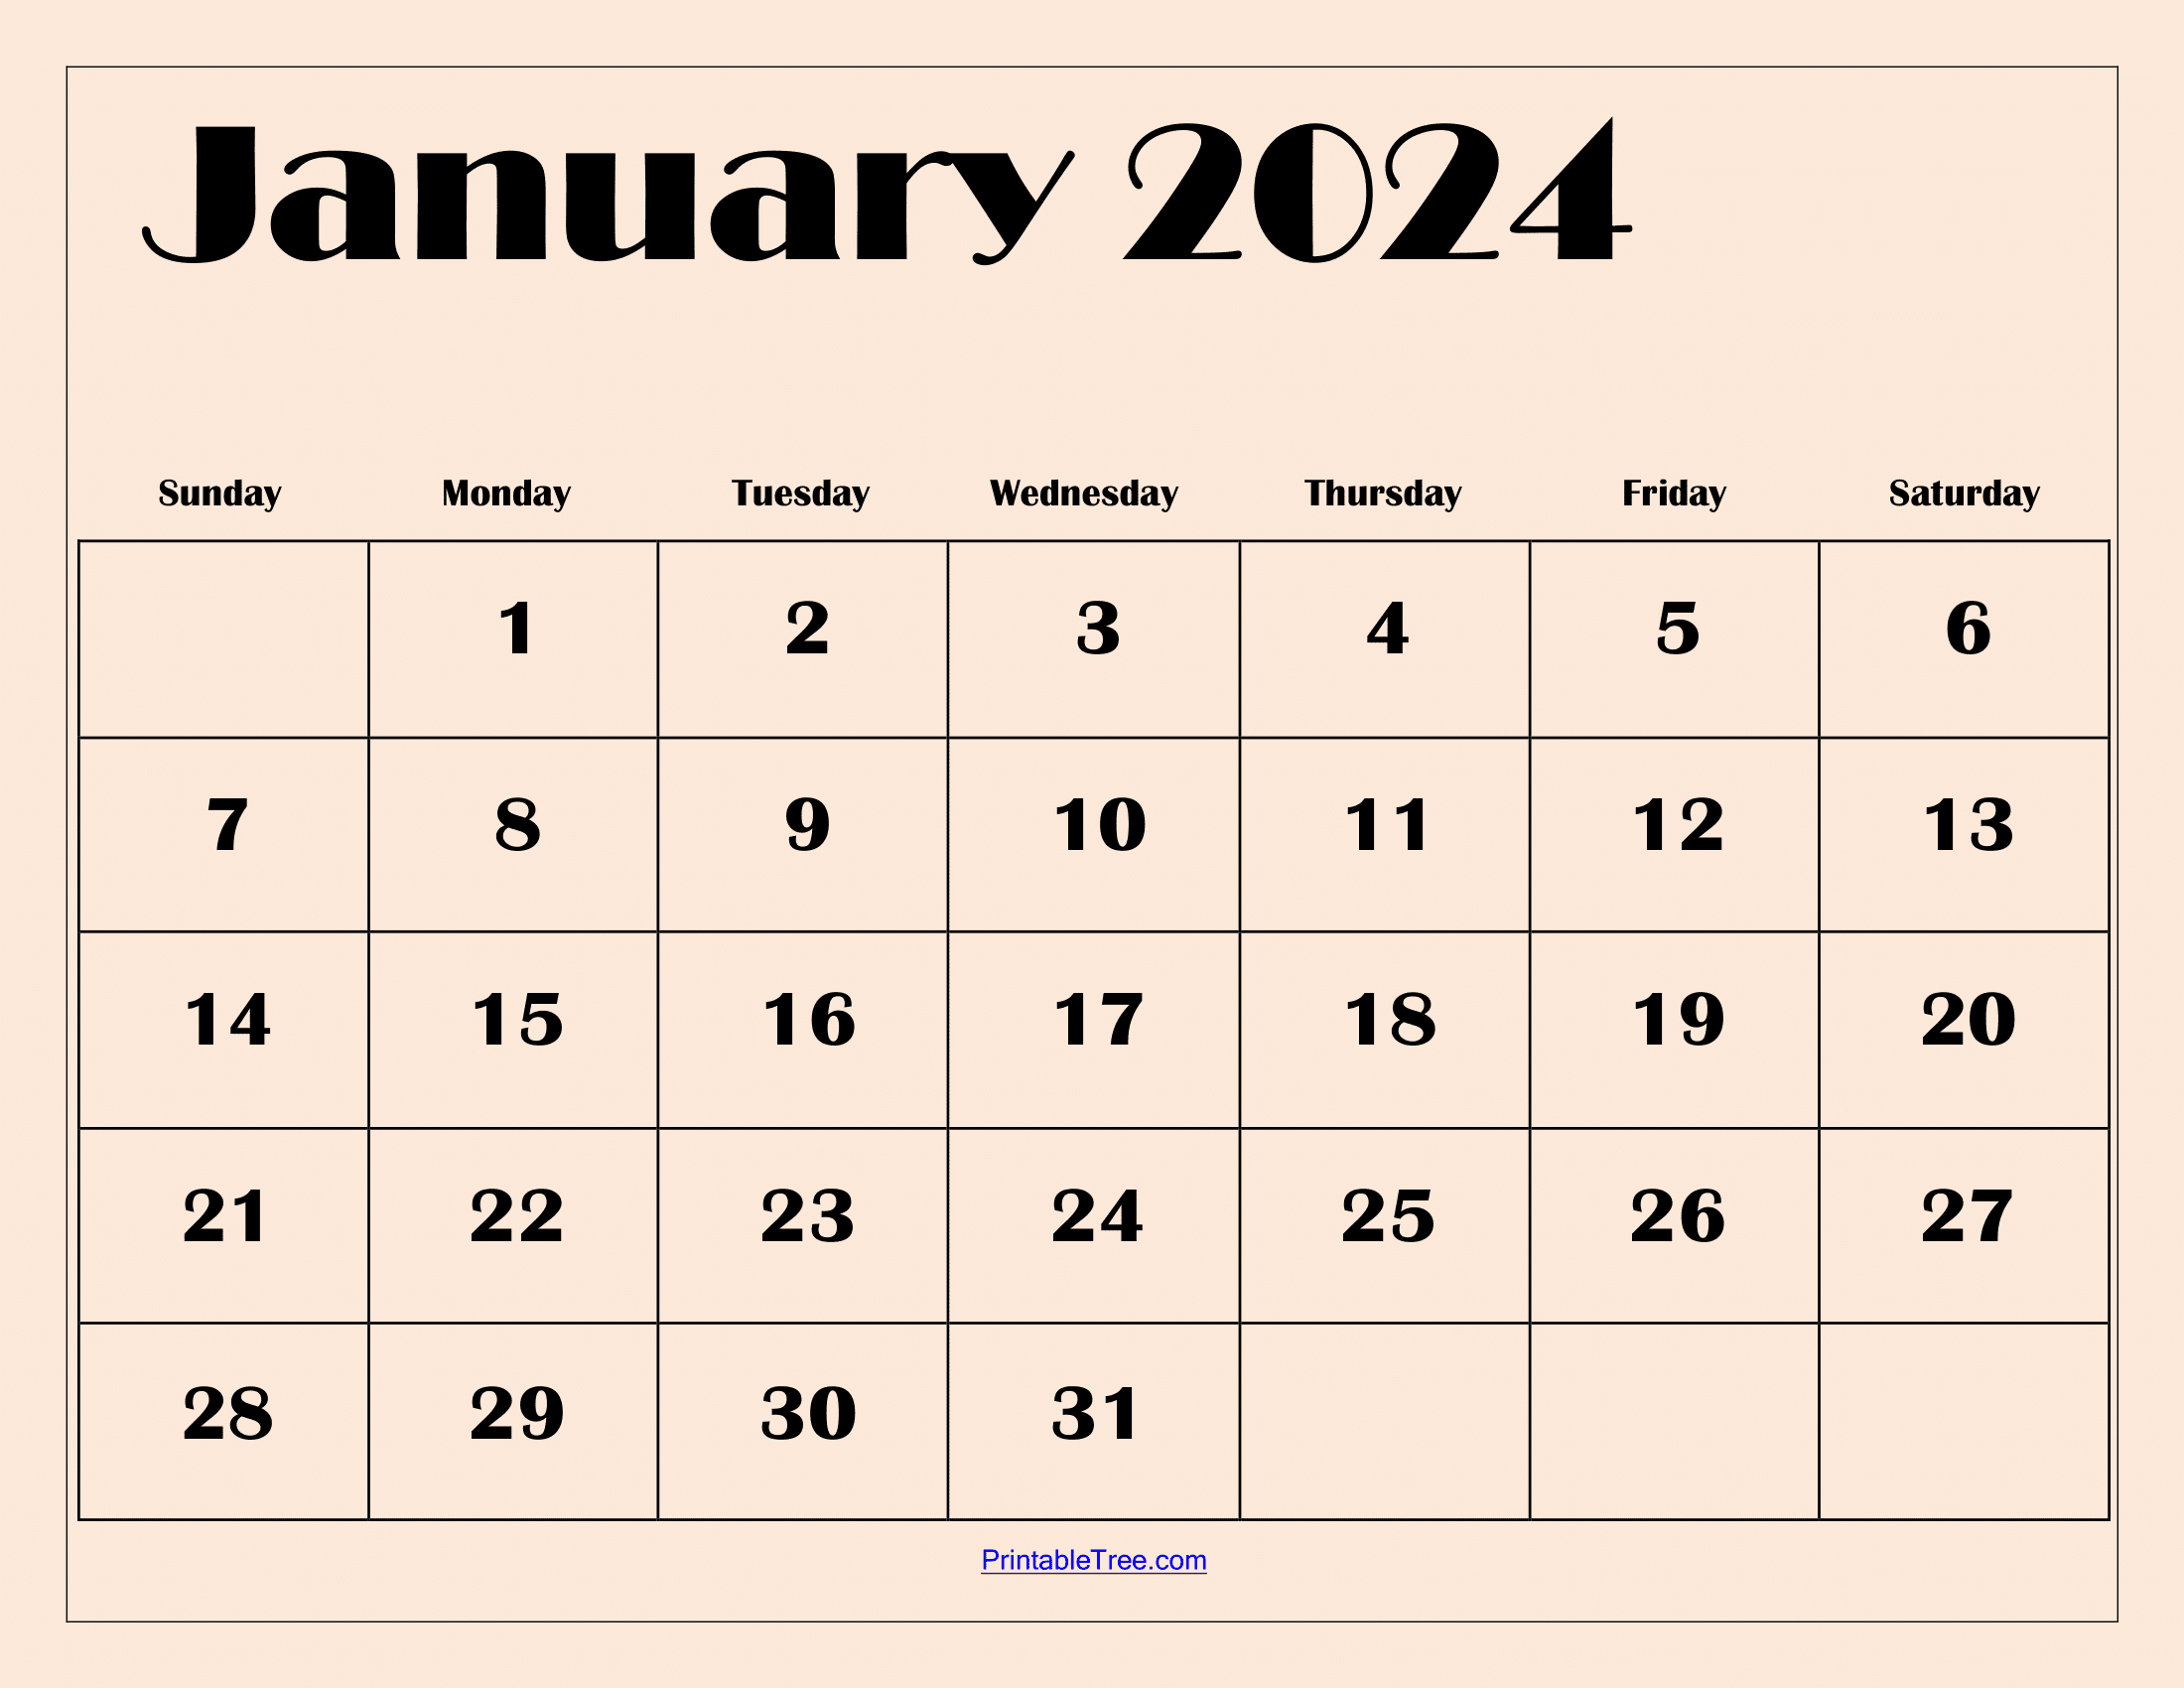 January 2024 Calendar Printable Pdf Template With Holidays | Printable Calendar 2024 January Free